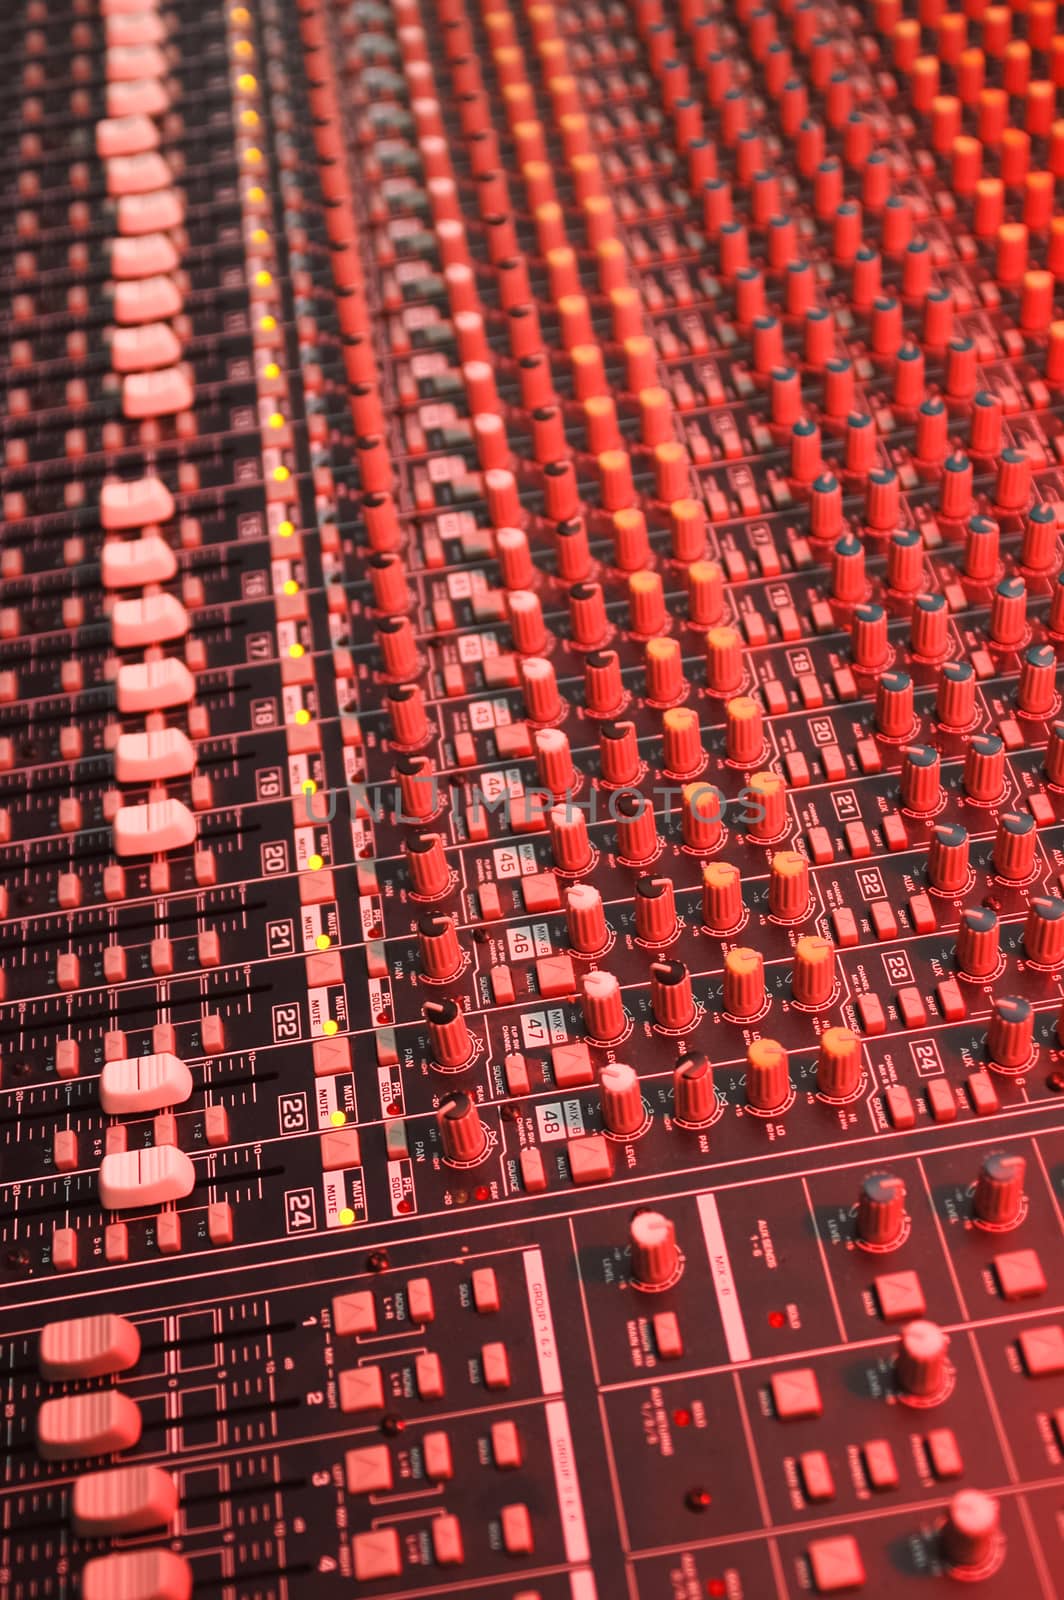 studio soundboard under red lighting